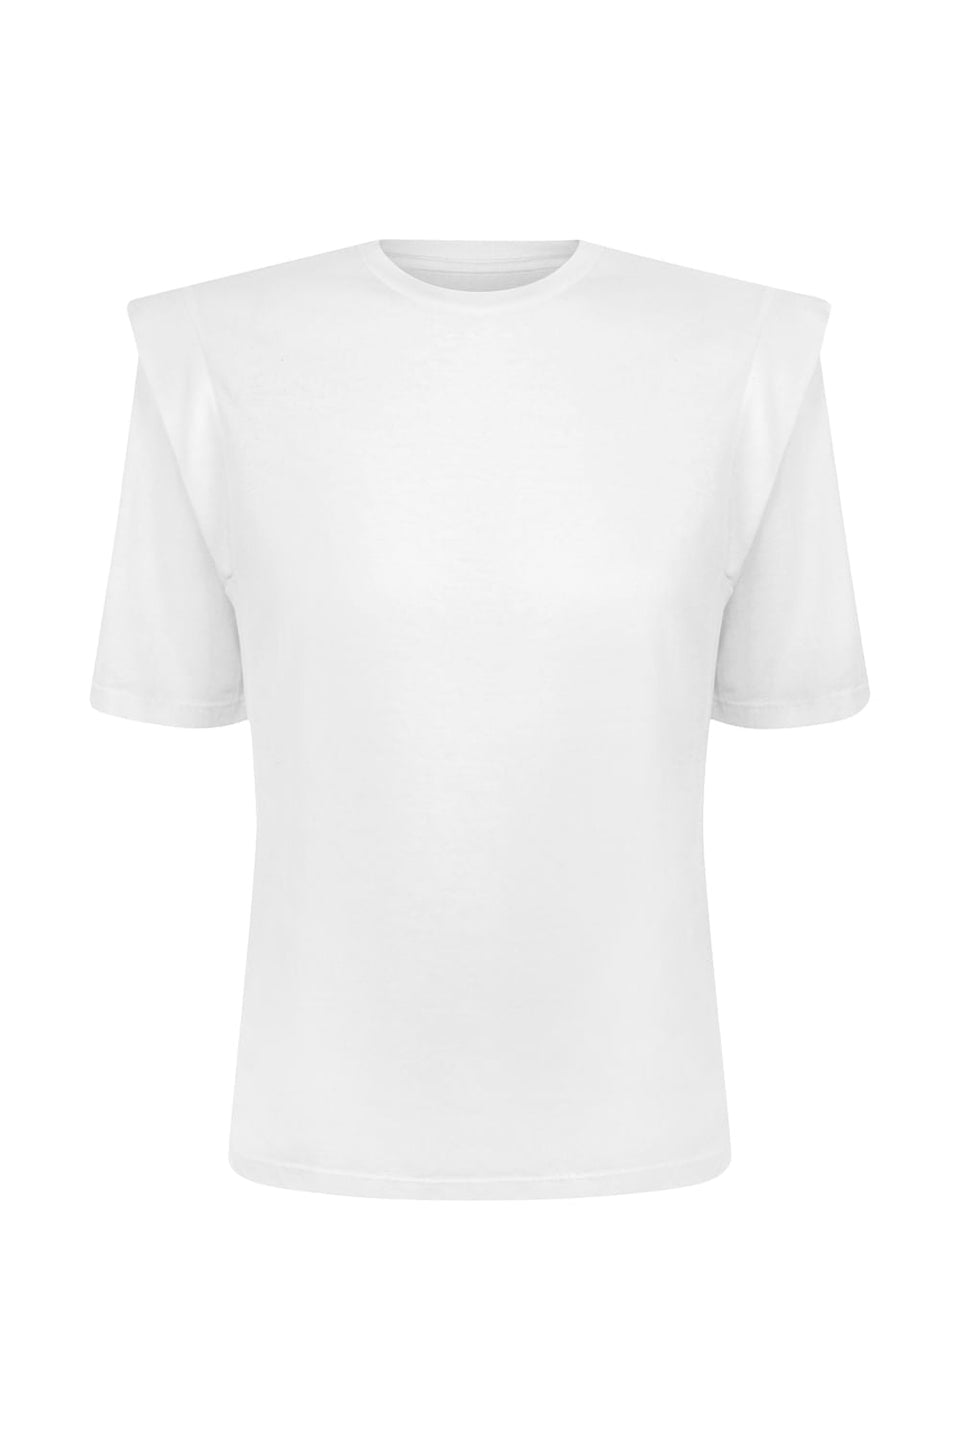 Camiseta Ombro Manga Branco